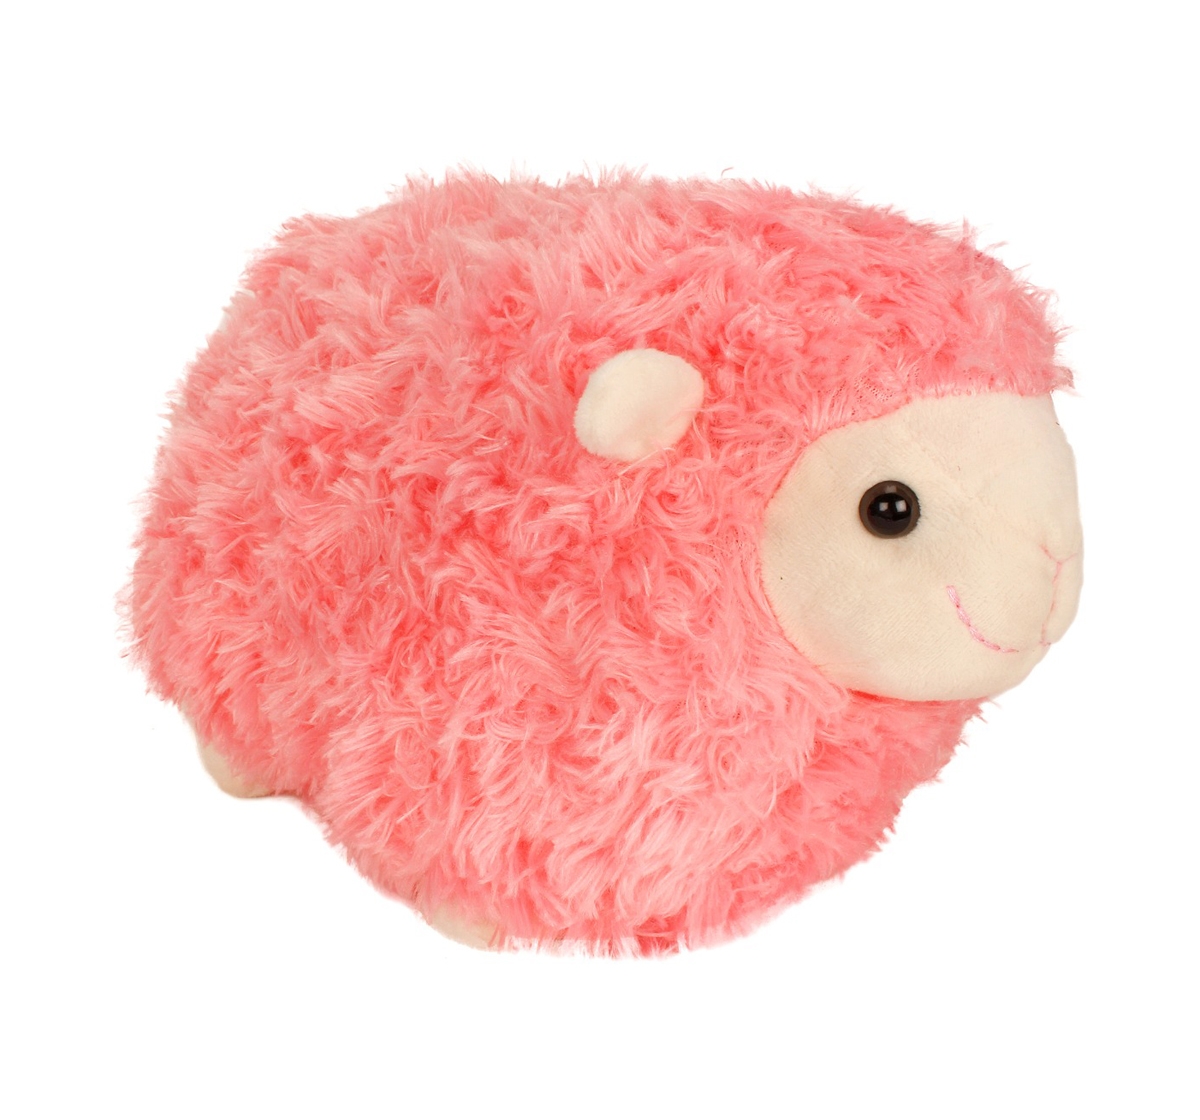 Fuzzbuzz | Fuzzbuzz Pink Lamb Stuffed Animal - 28Cm Quirky Soft Toys for Kids age 0M+ - 20 Cm (Pink)